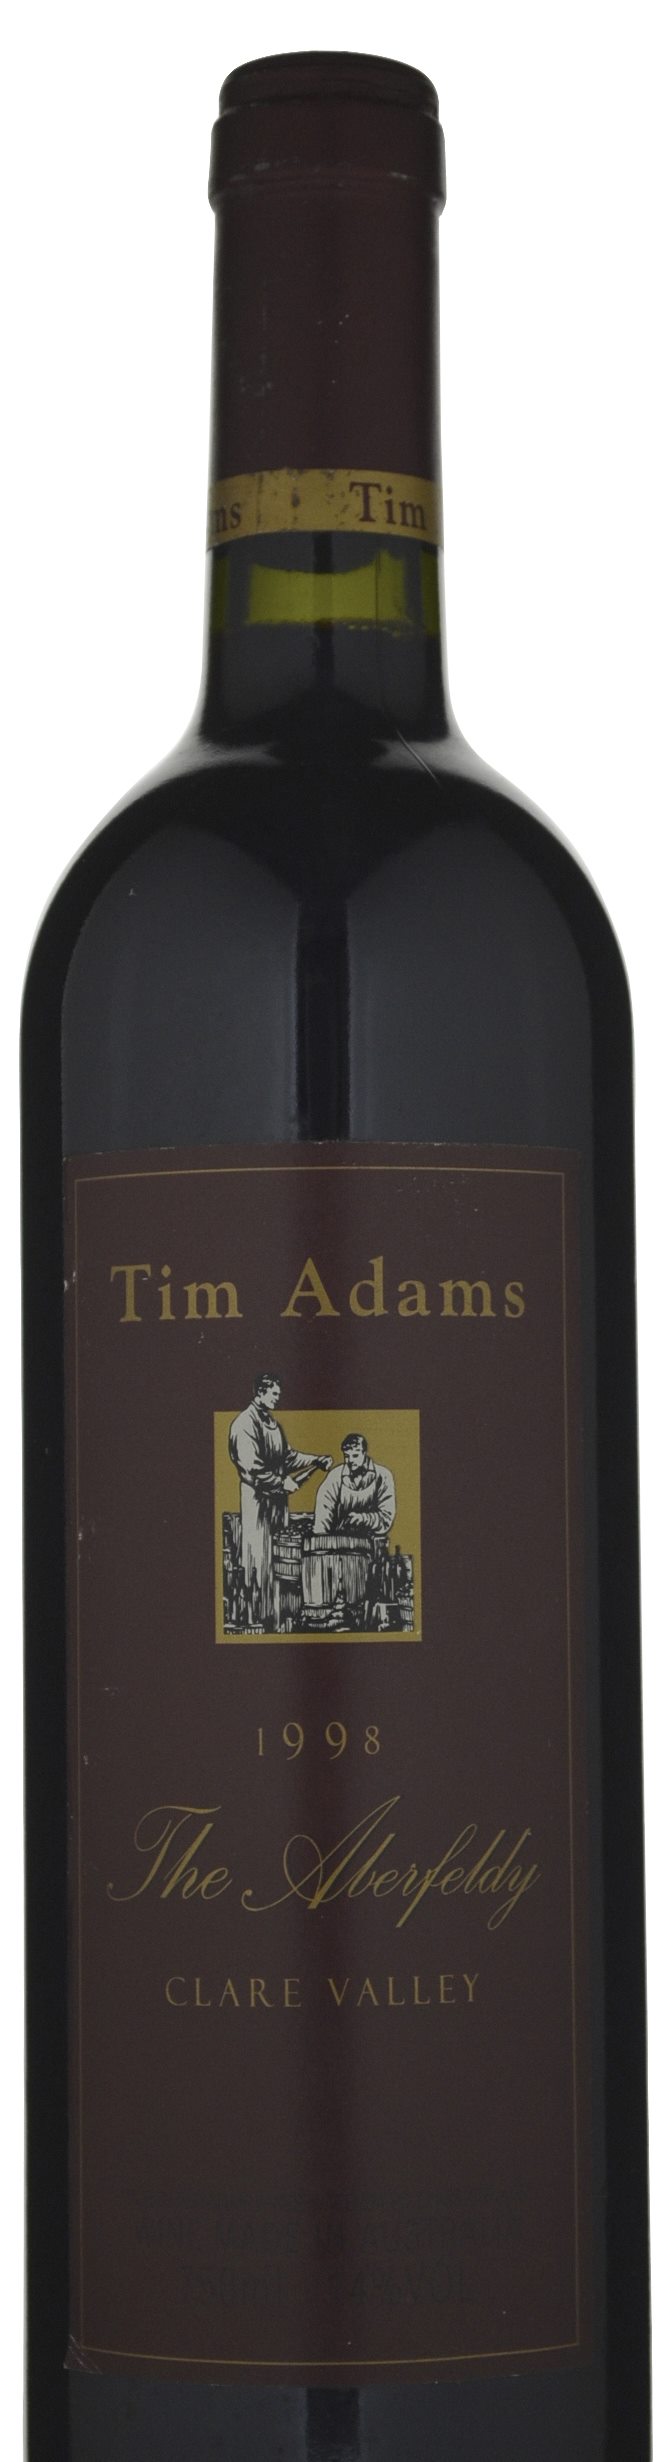 Tim Adams The Aberfeldy Shiraz 1998